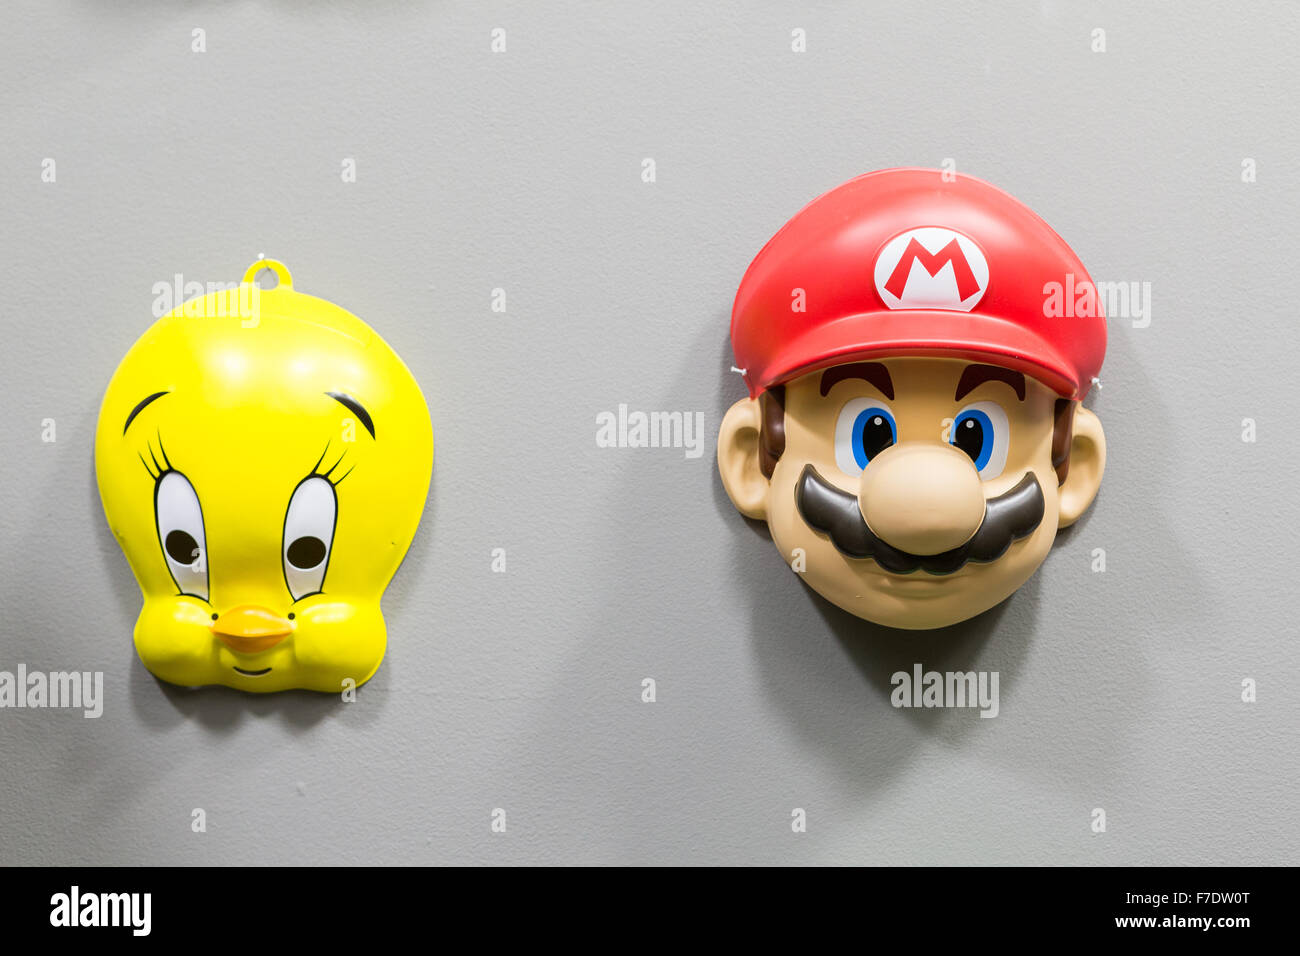 Mario bross fotografías e imágenes de alta resolución - Alamy